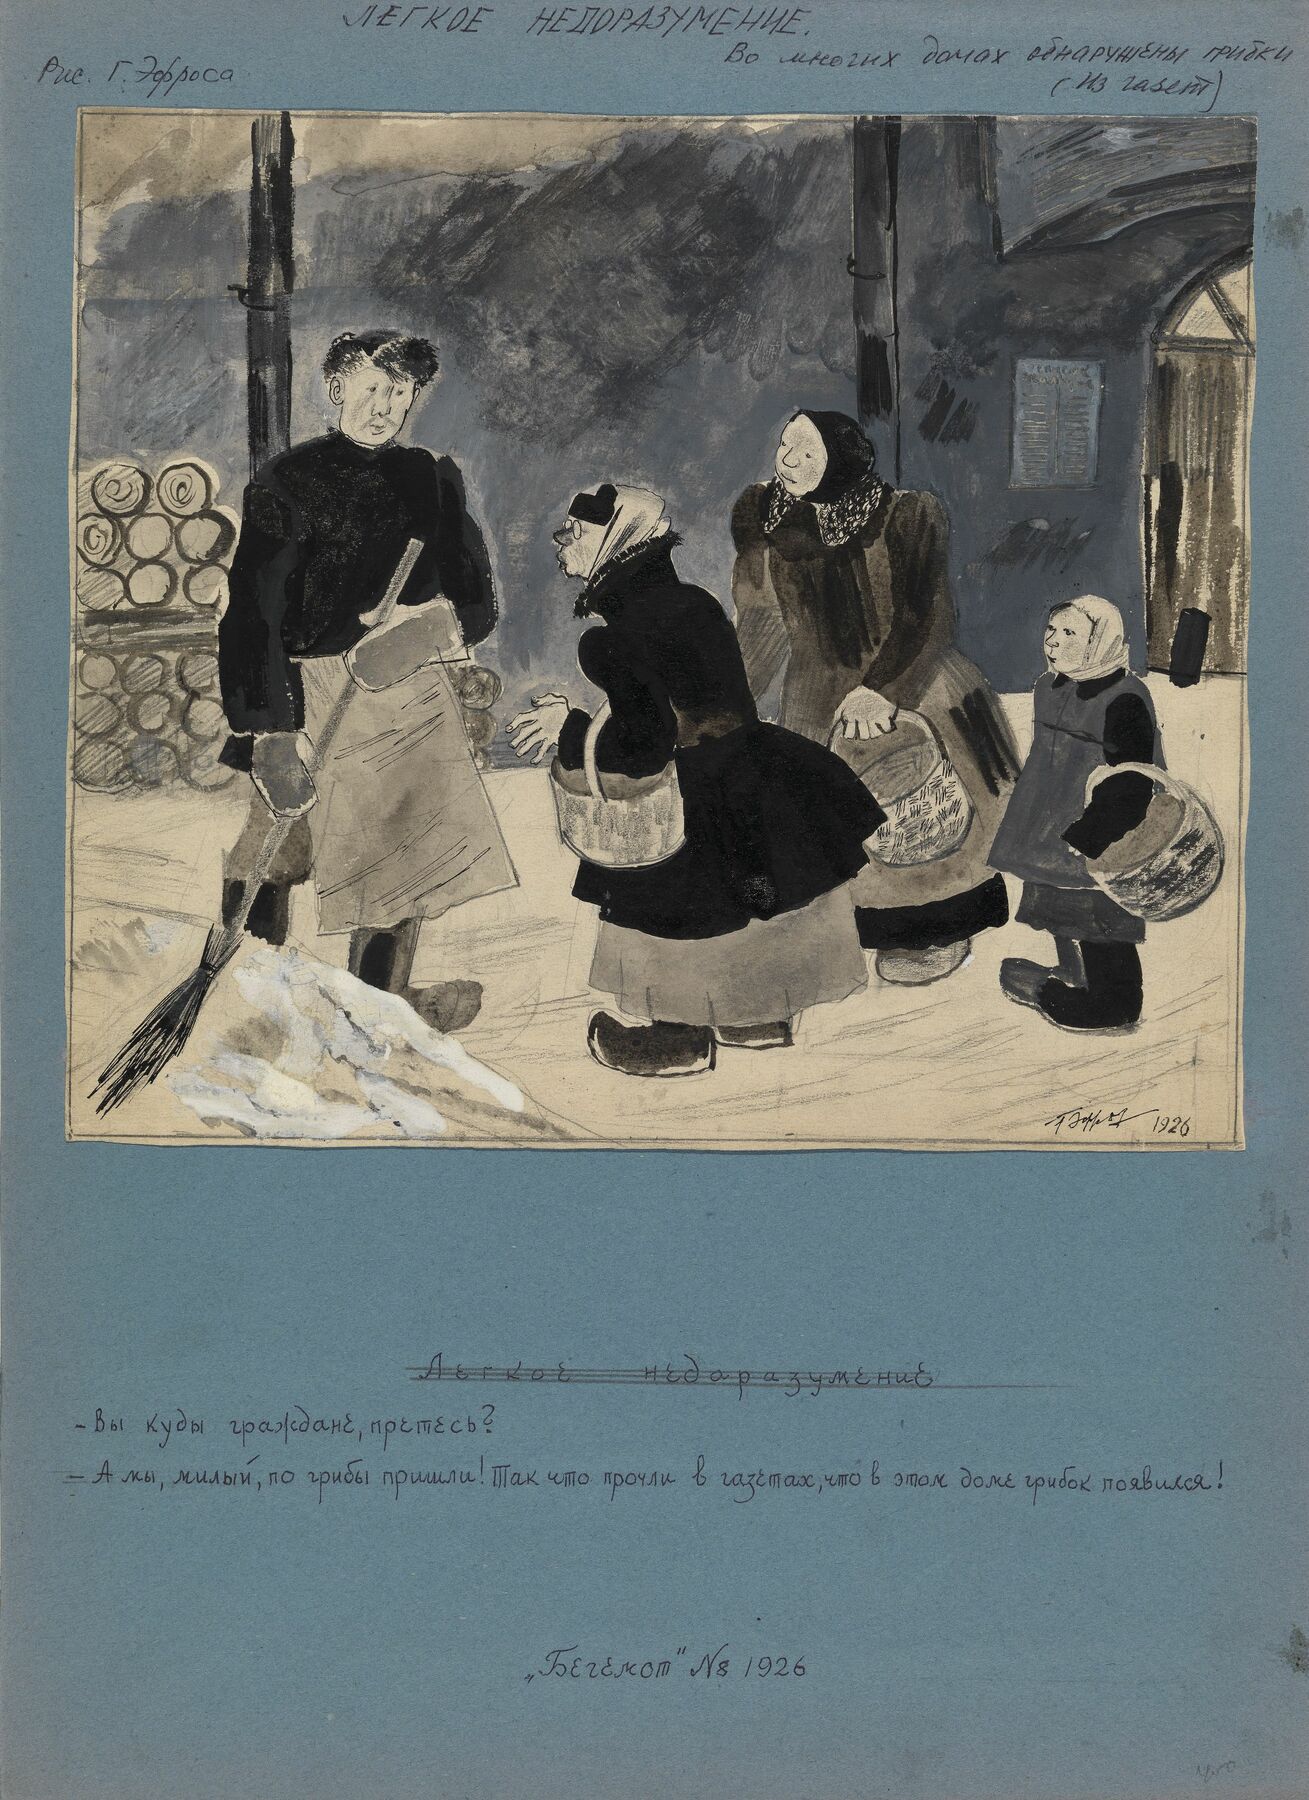 A Slight Misunderstanding. Illustration for the Magazine "Begemot", No. 8, 1926